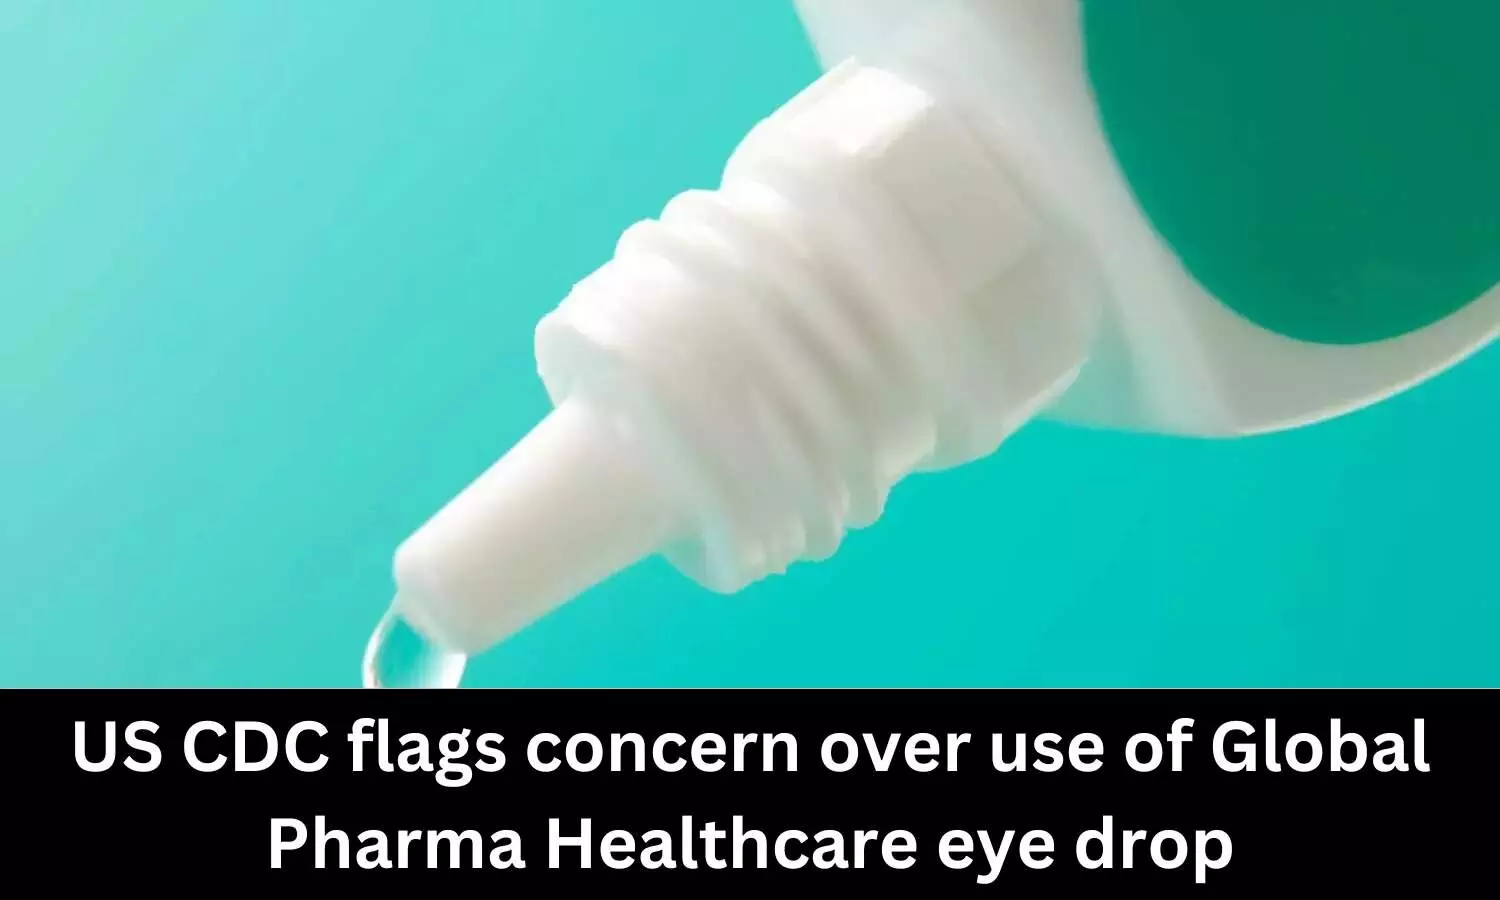 US CDC flags concern over use of Global Pharma Healthcare eye drop